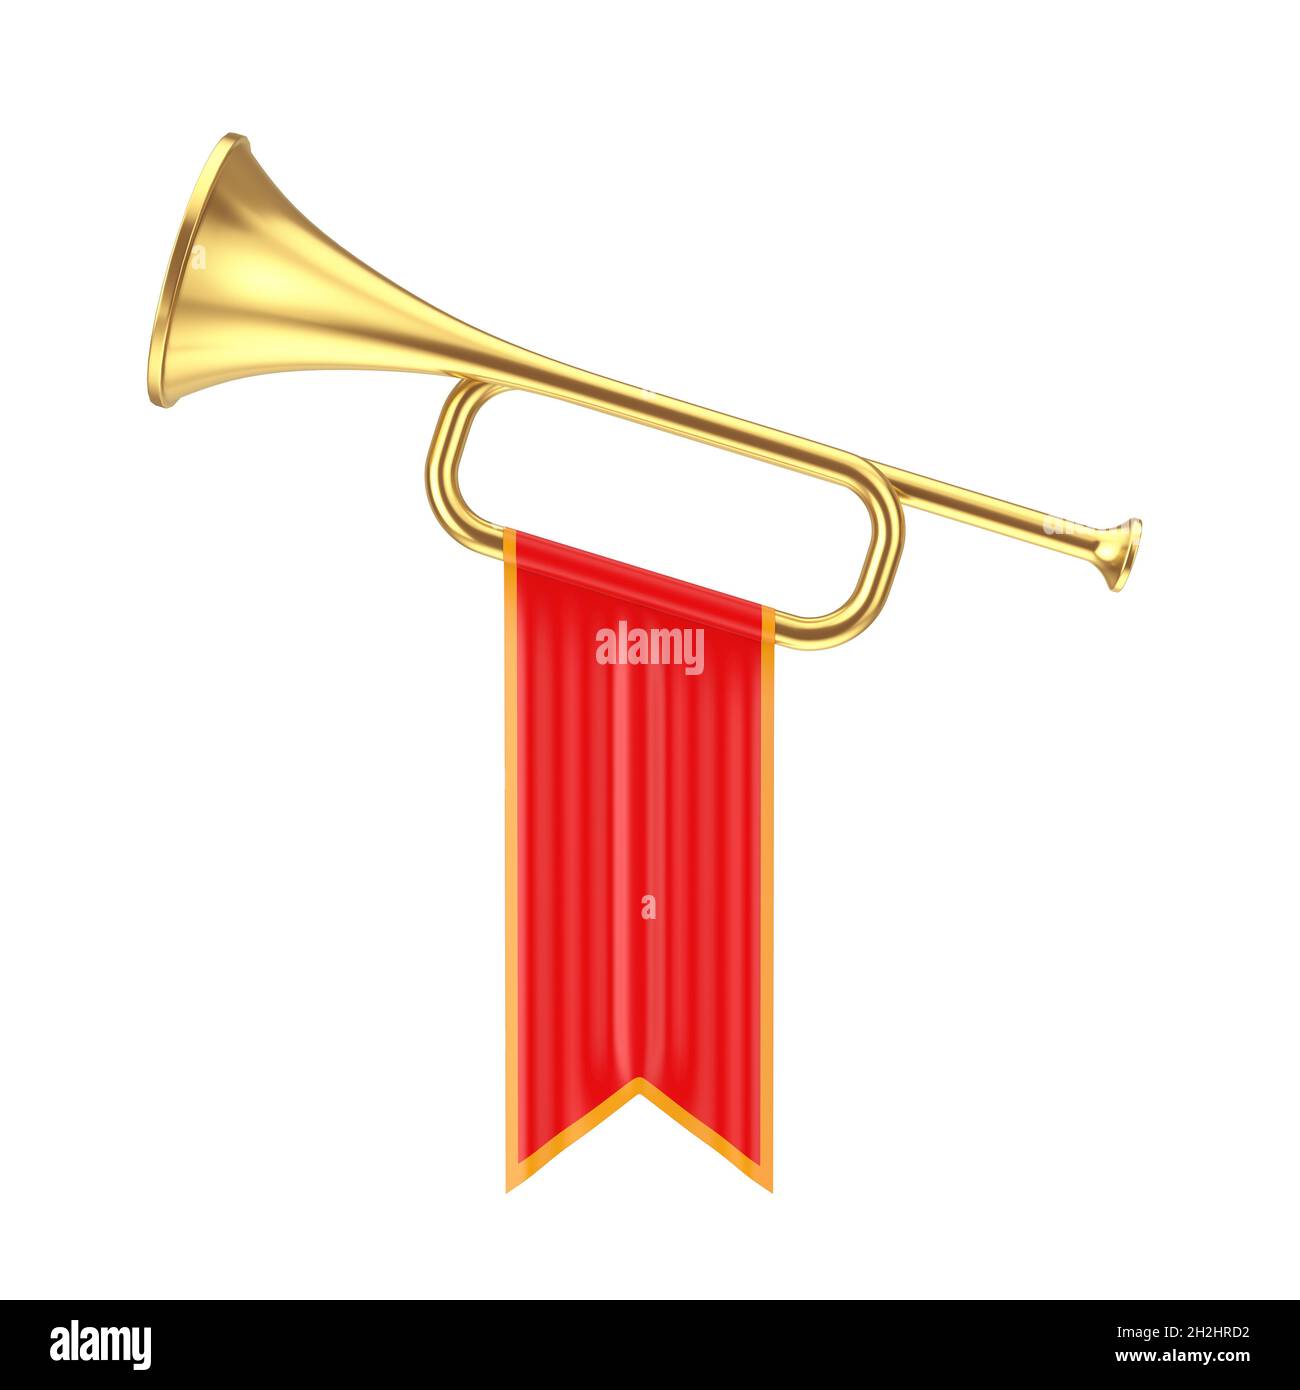 https://c8.alamy.com/comp/2H2HRD2/golden-fanfare-trumpet-with-red-flag-on-a-white-background-3d-rendering-2H2HRD2.jpg